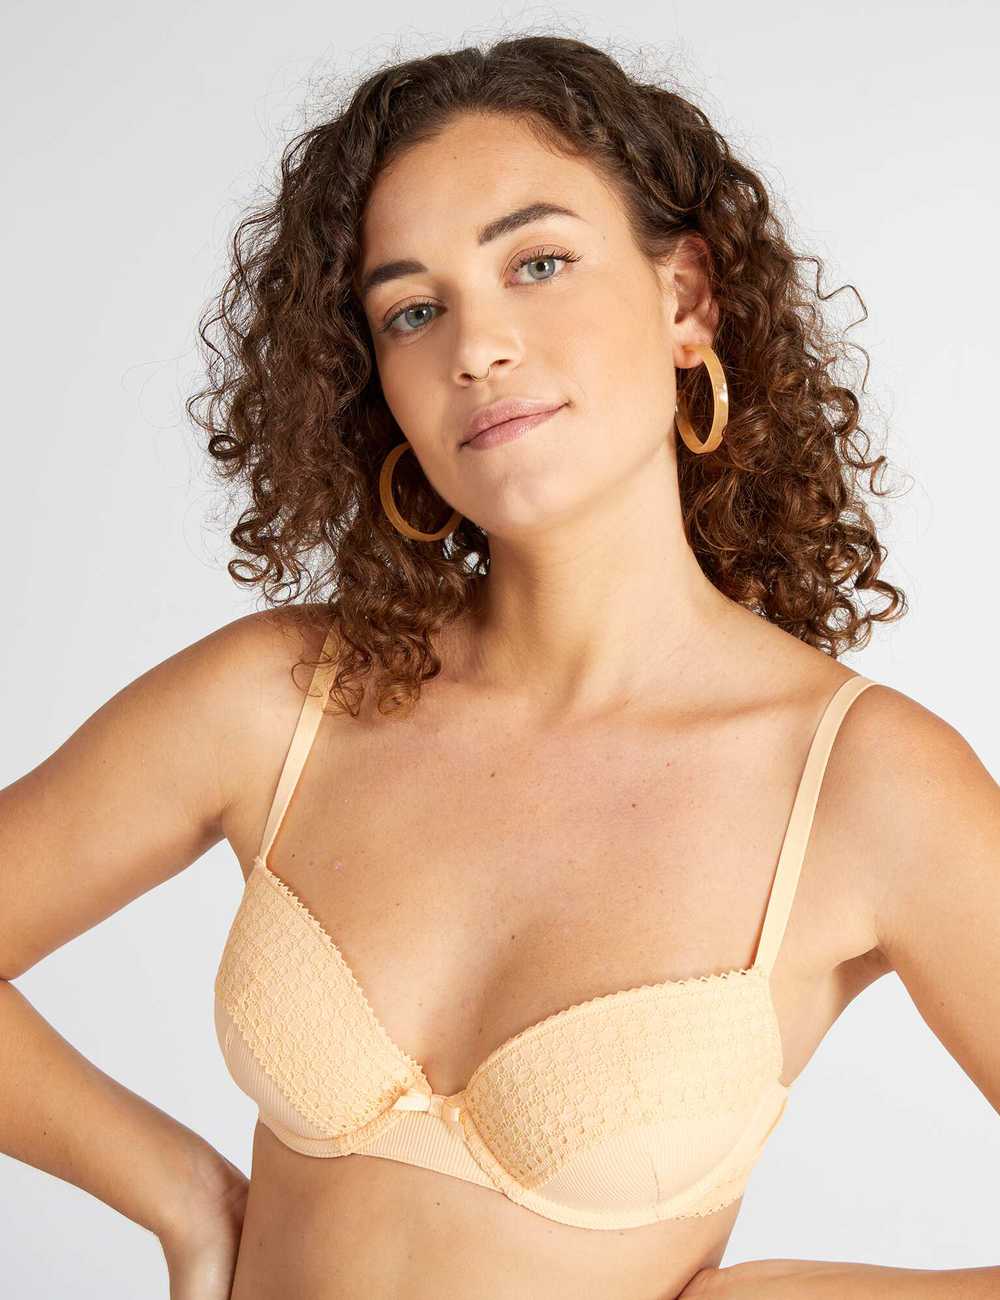 Buy Lace padded bra Online in Dubai & the UAE